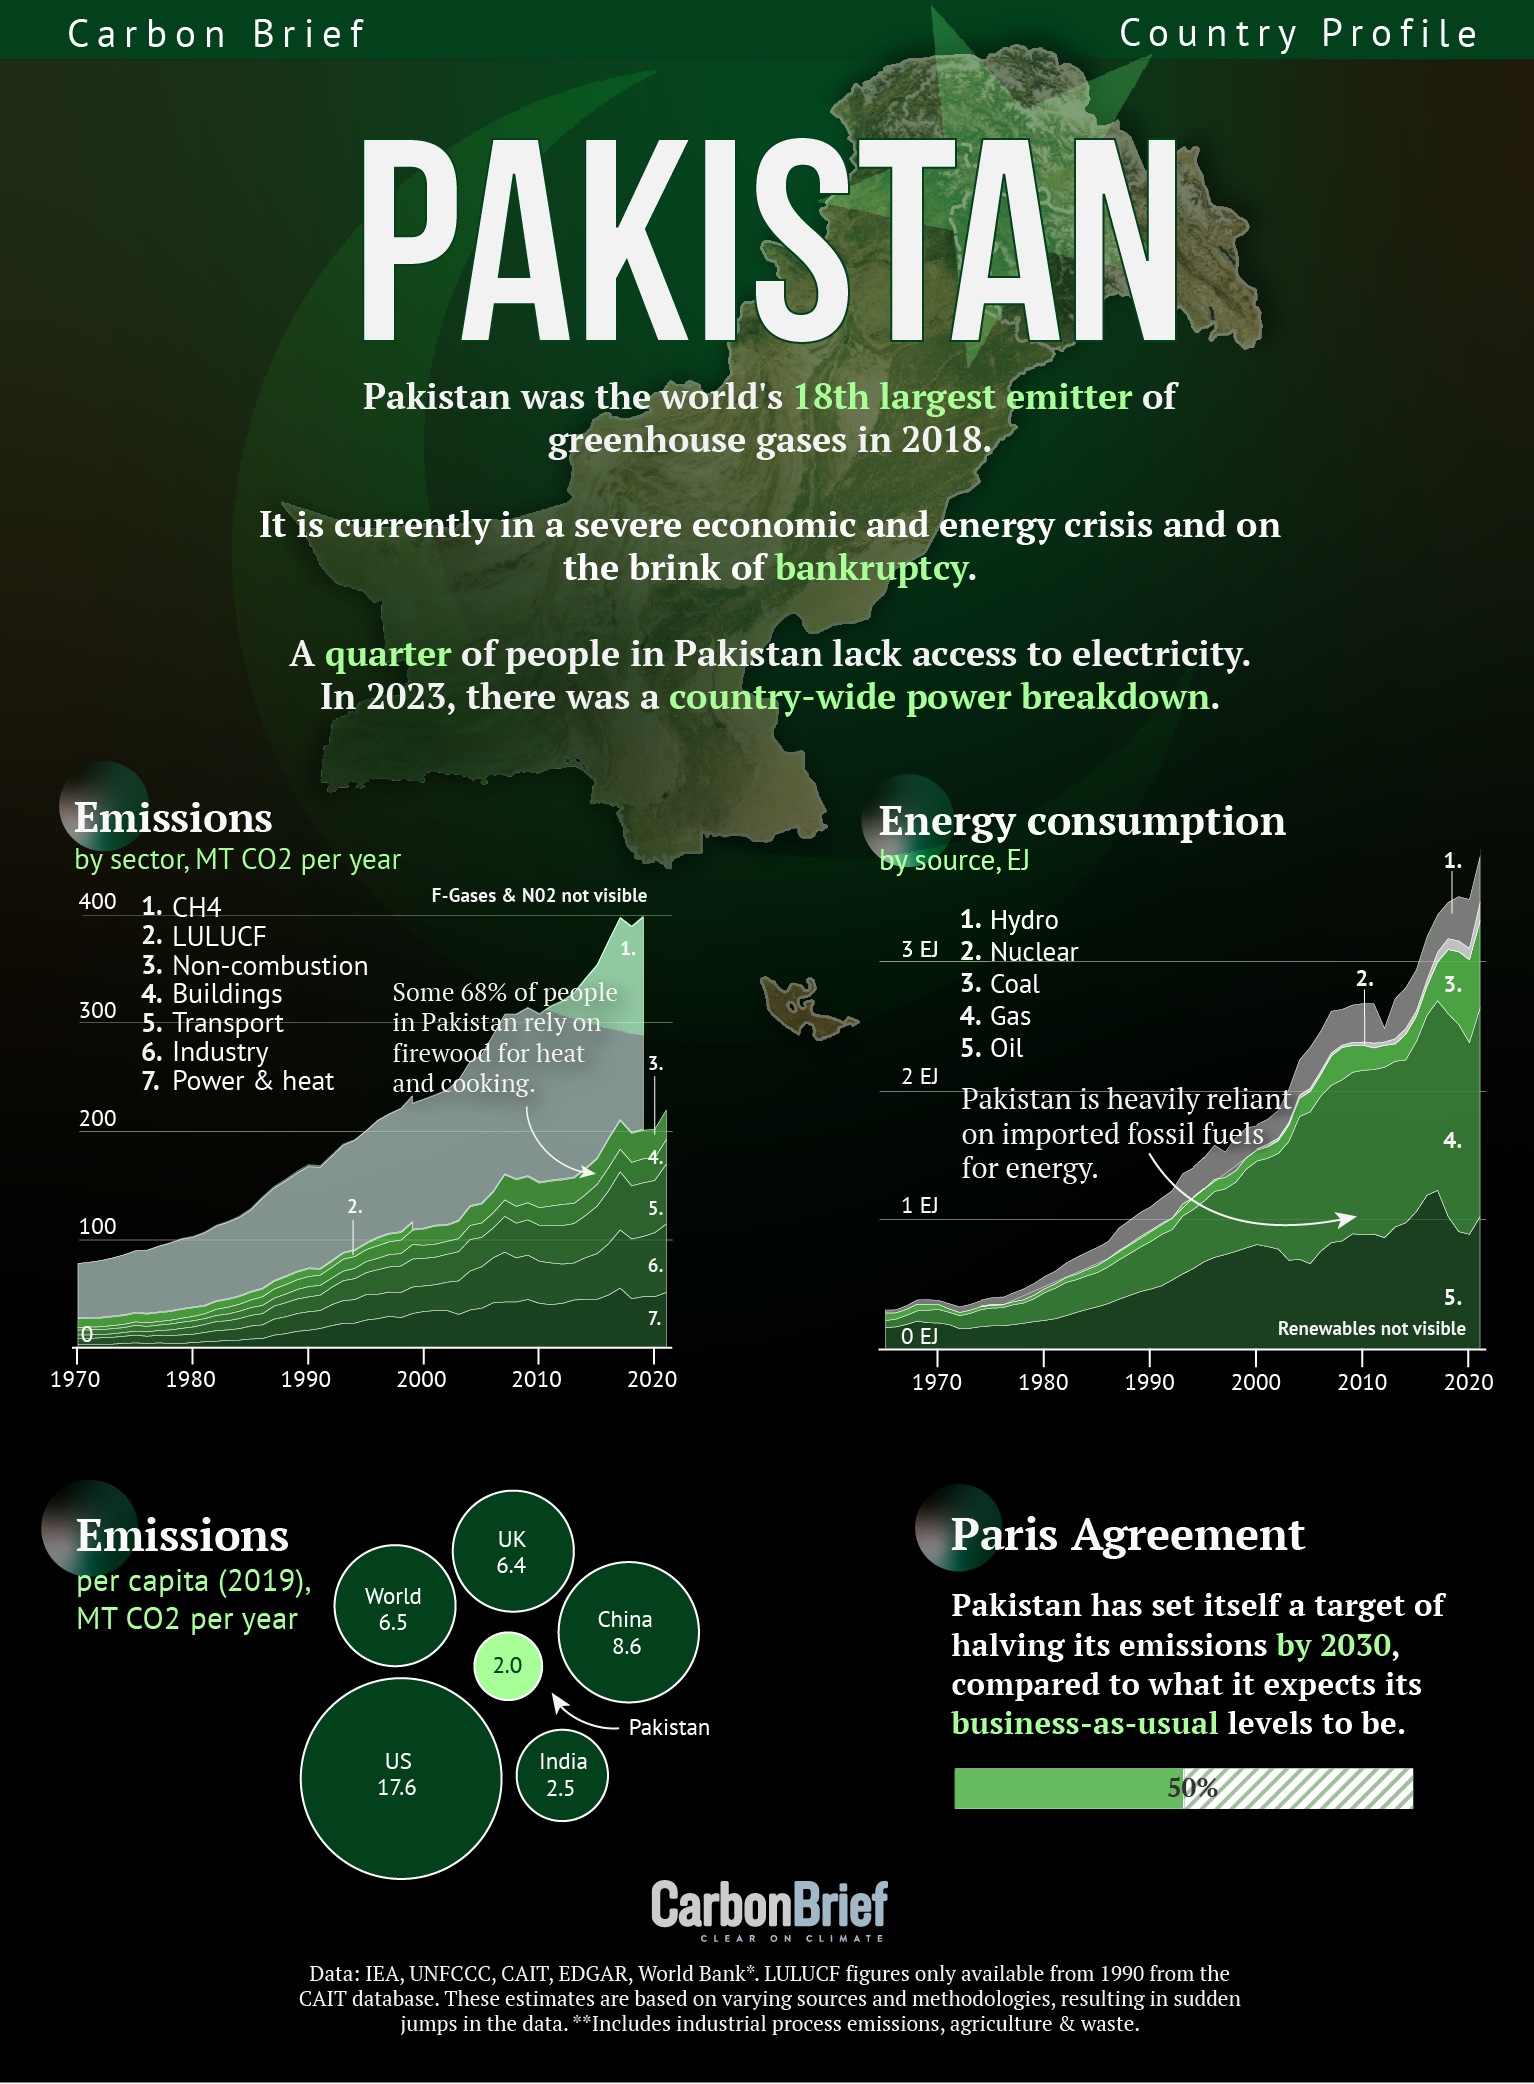 The Carbon Brief Profilo: Pakistan